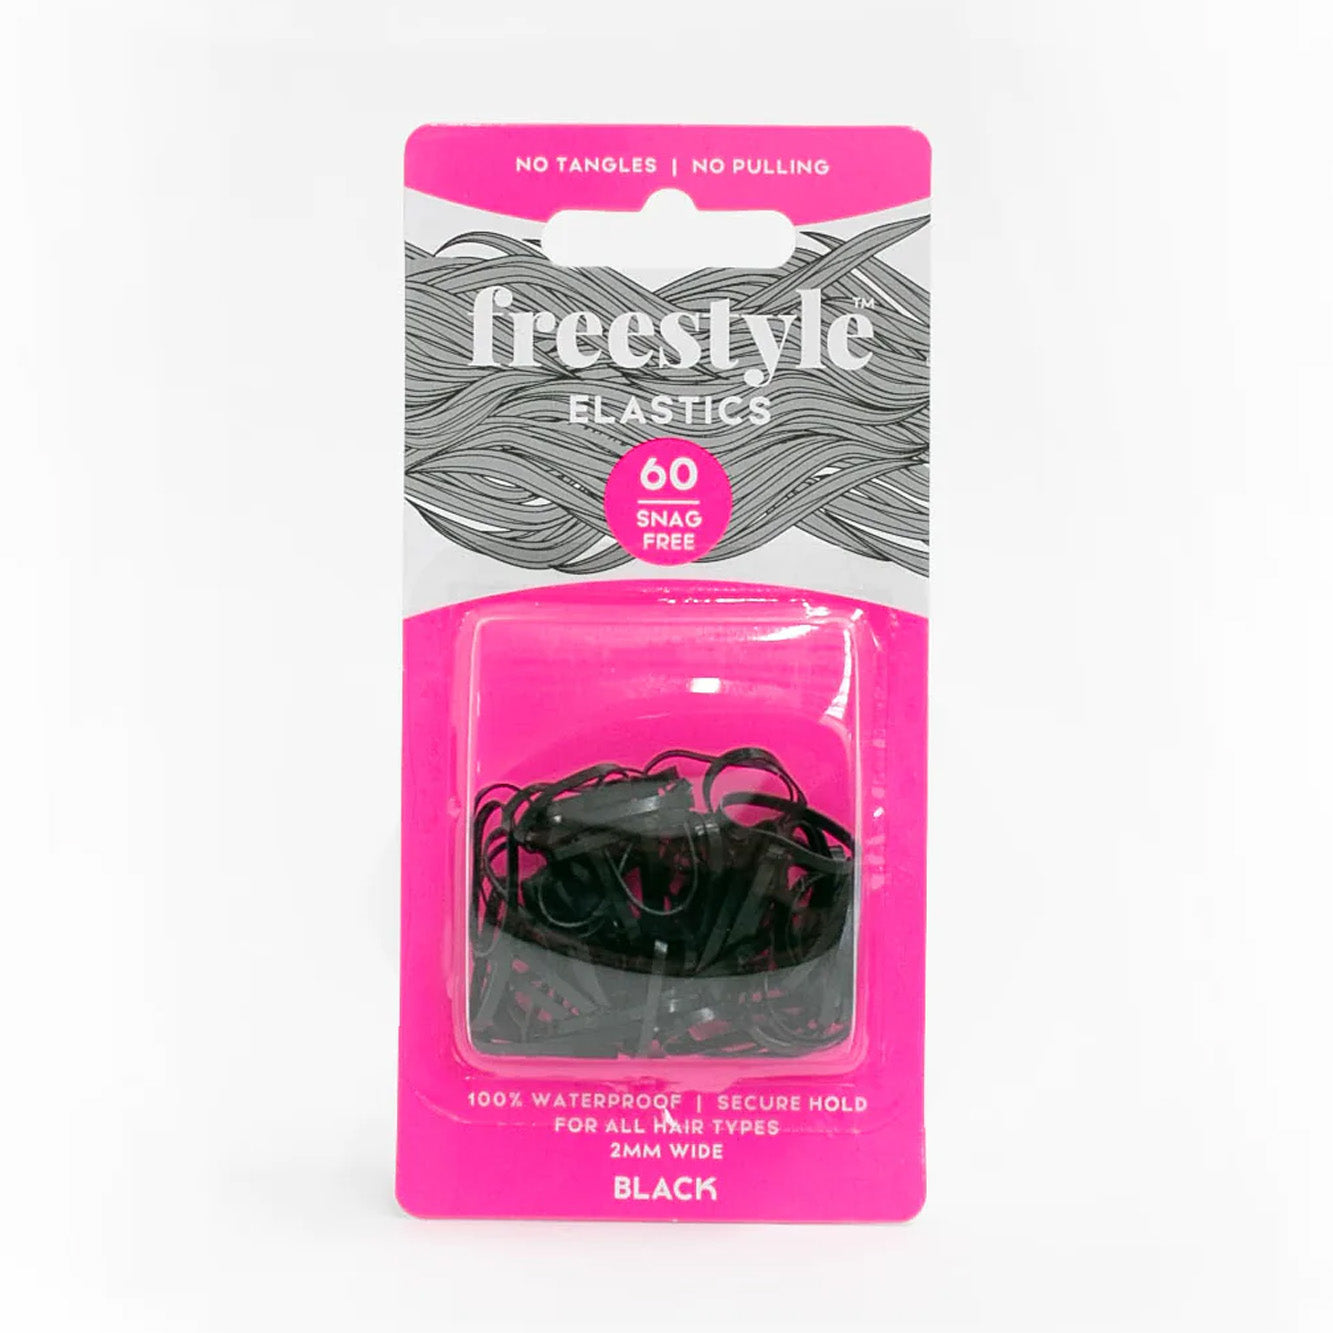 Freestyle Gliders Snag Free Hair Elastics 2mm 60pc - Black